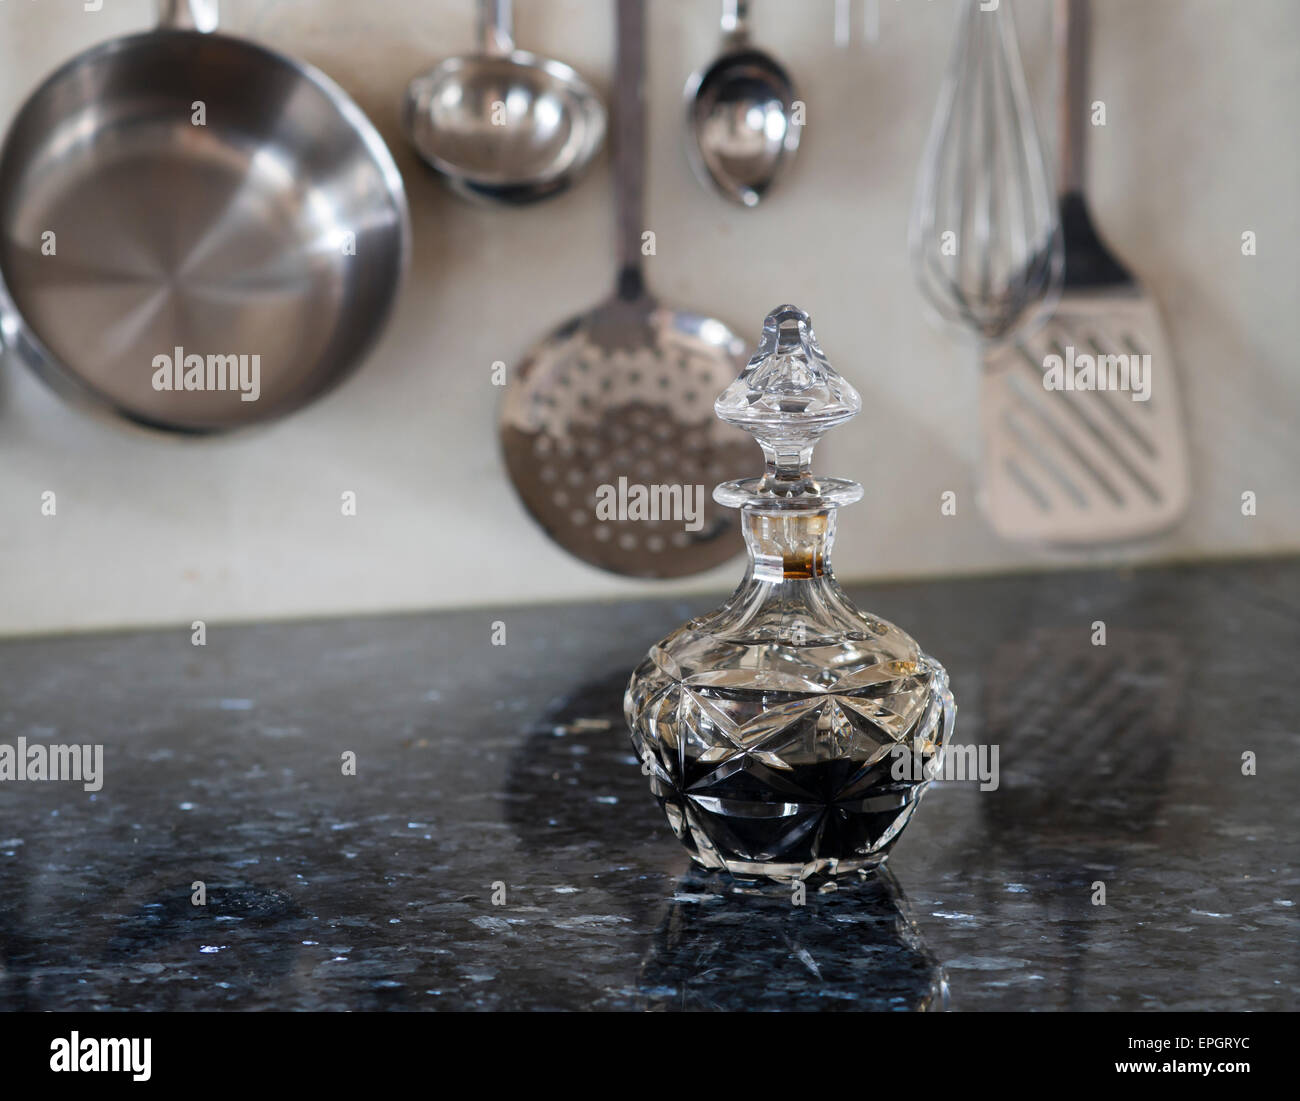 Balsamic Vinegar In A Glass Carafe On A Granite Kitchen Countertop